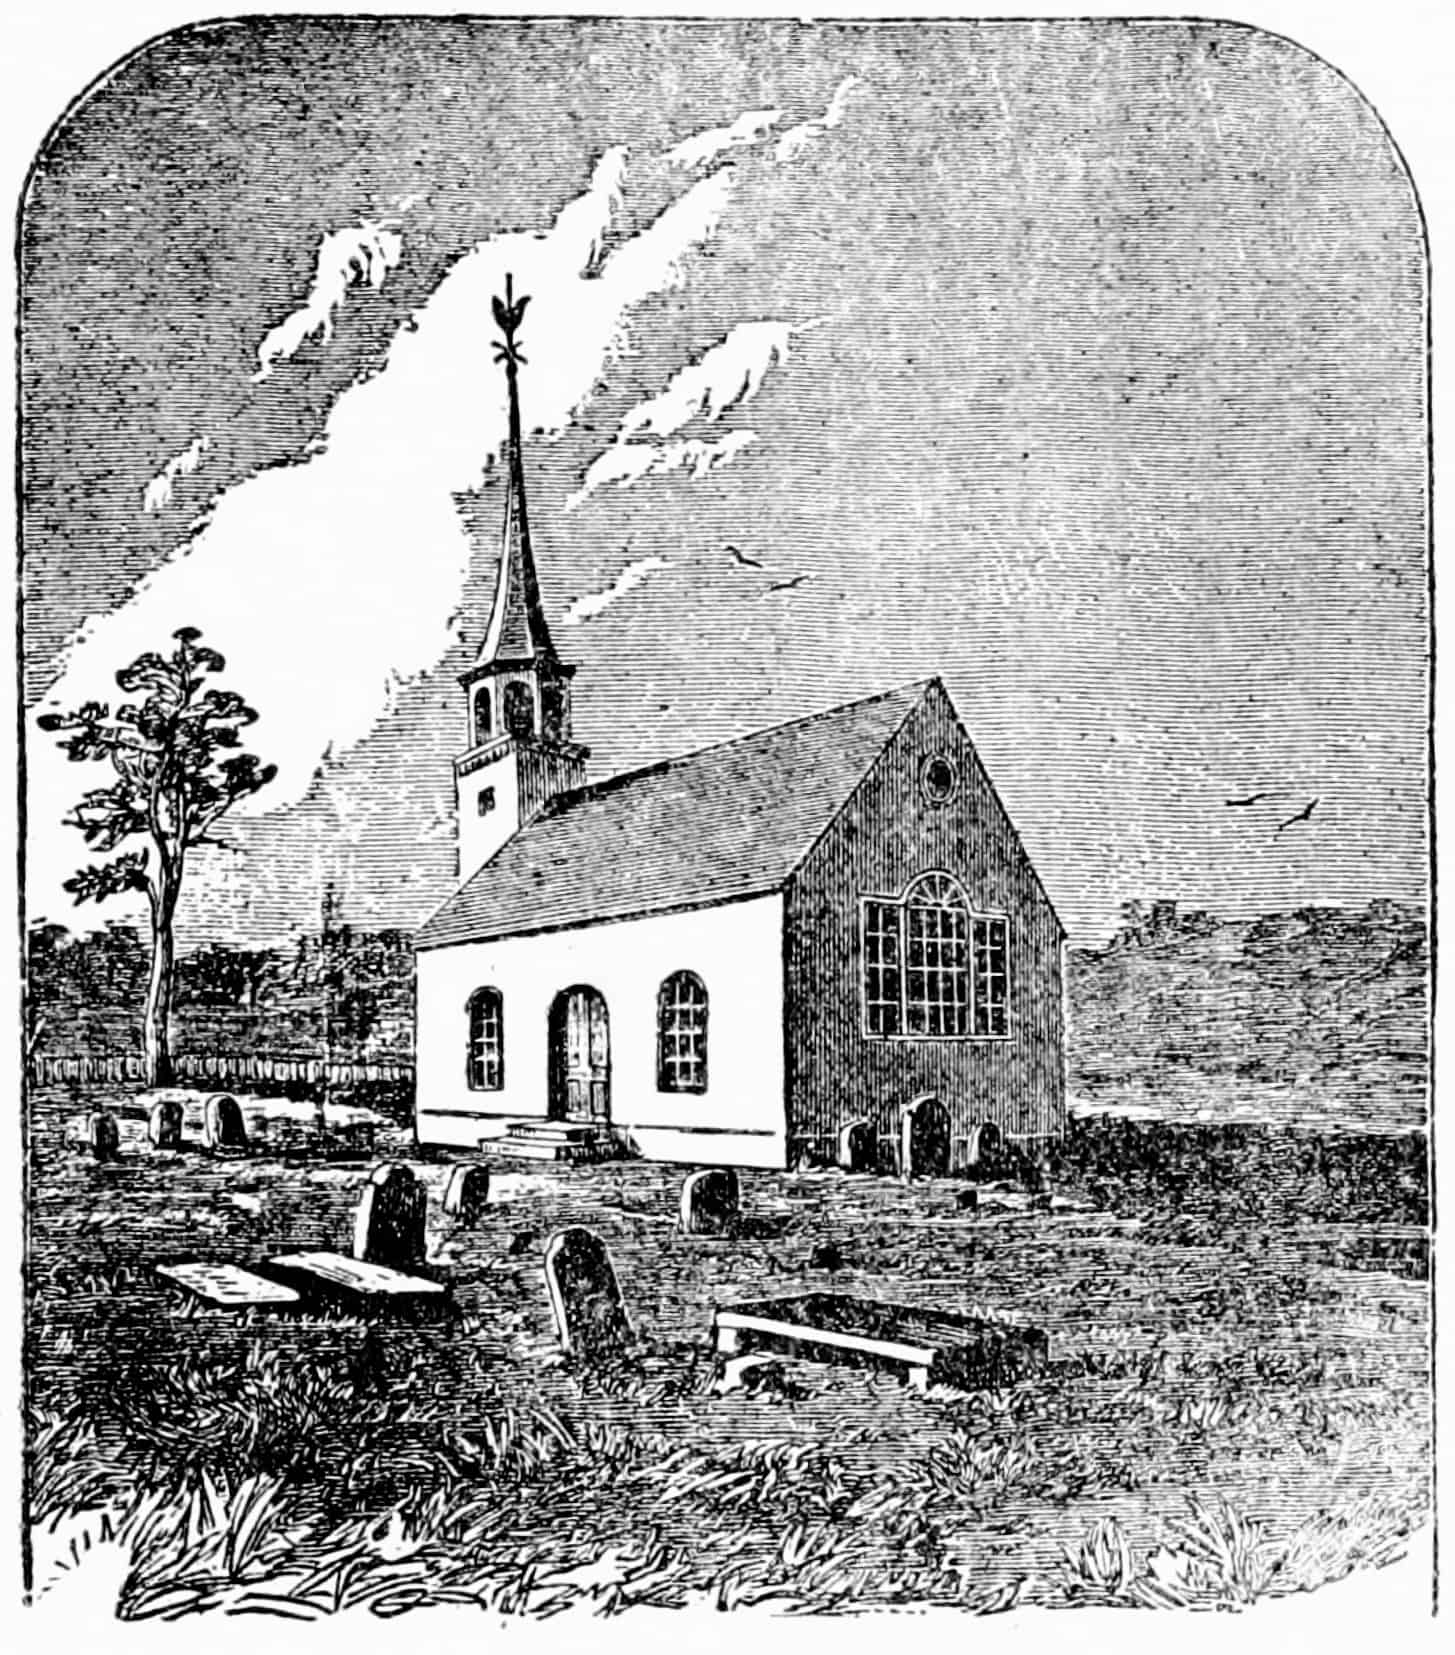 The original church building of St. George's Episcopal Church, Hempstead.